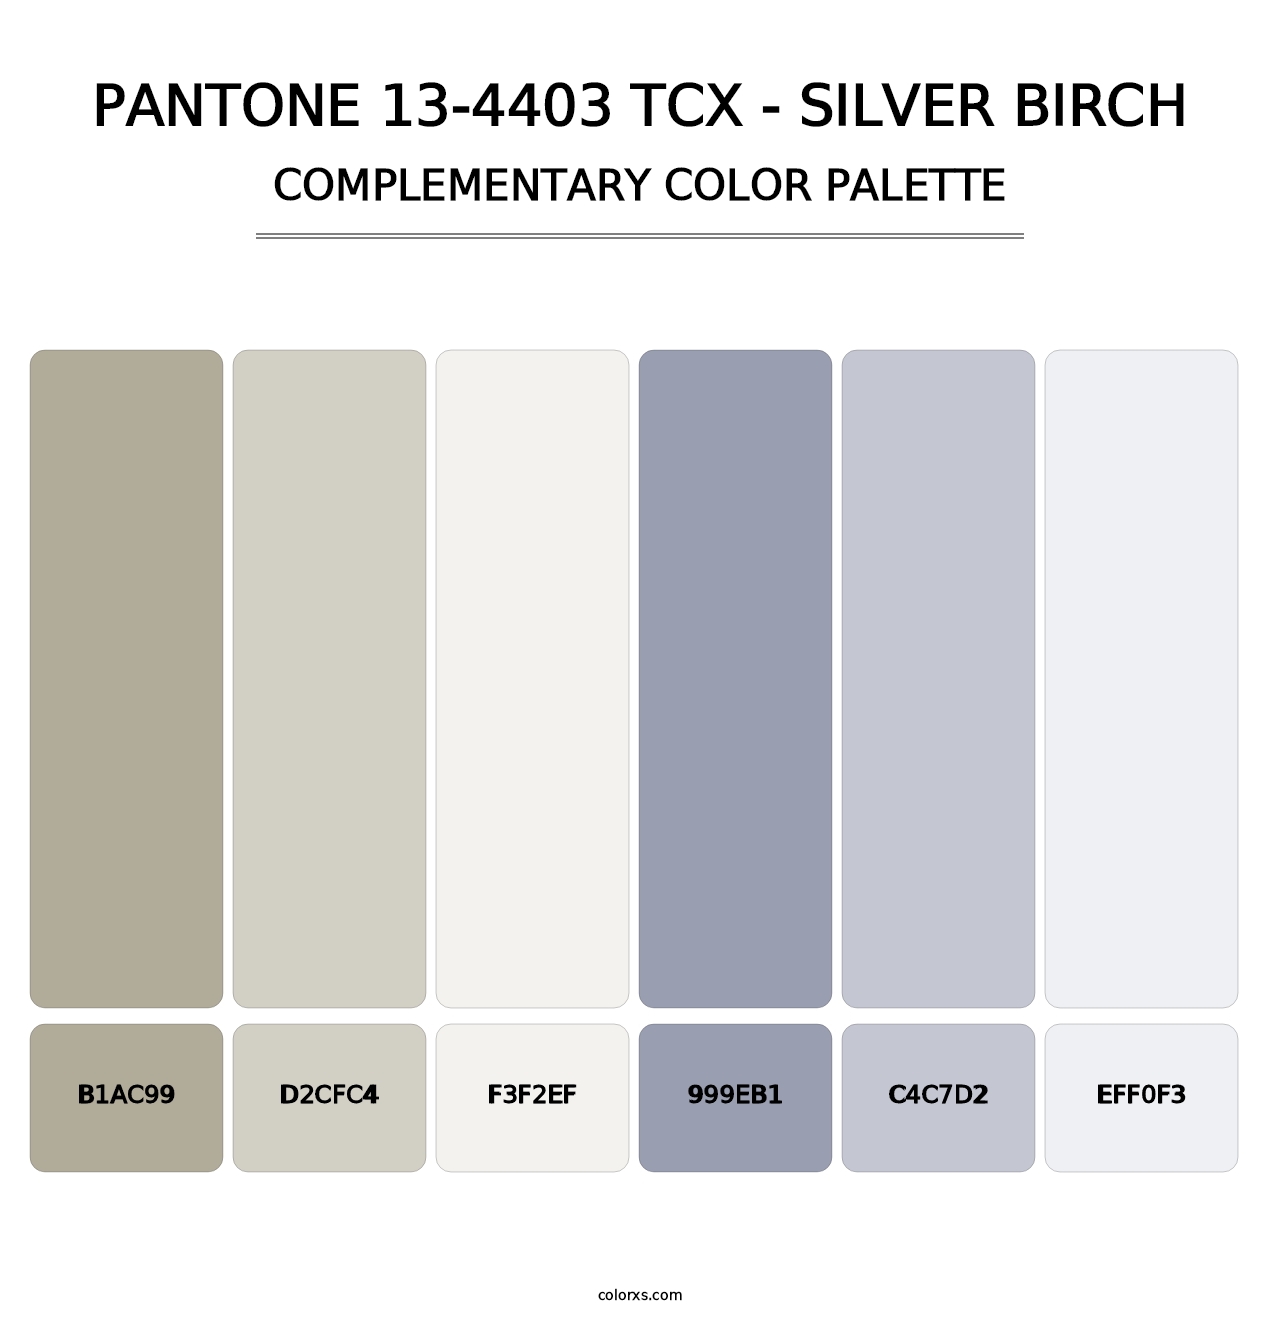 PANTONE 13-4403 TCX - Silver Birch - Complementary Color Palette